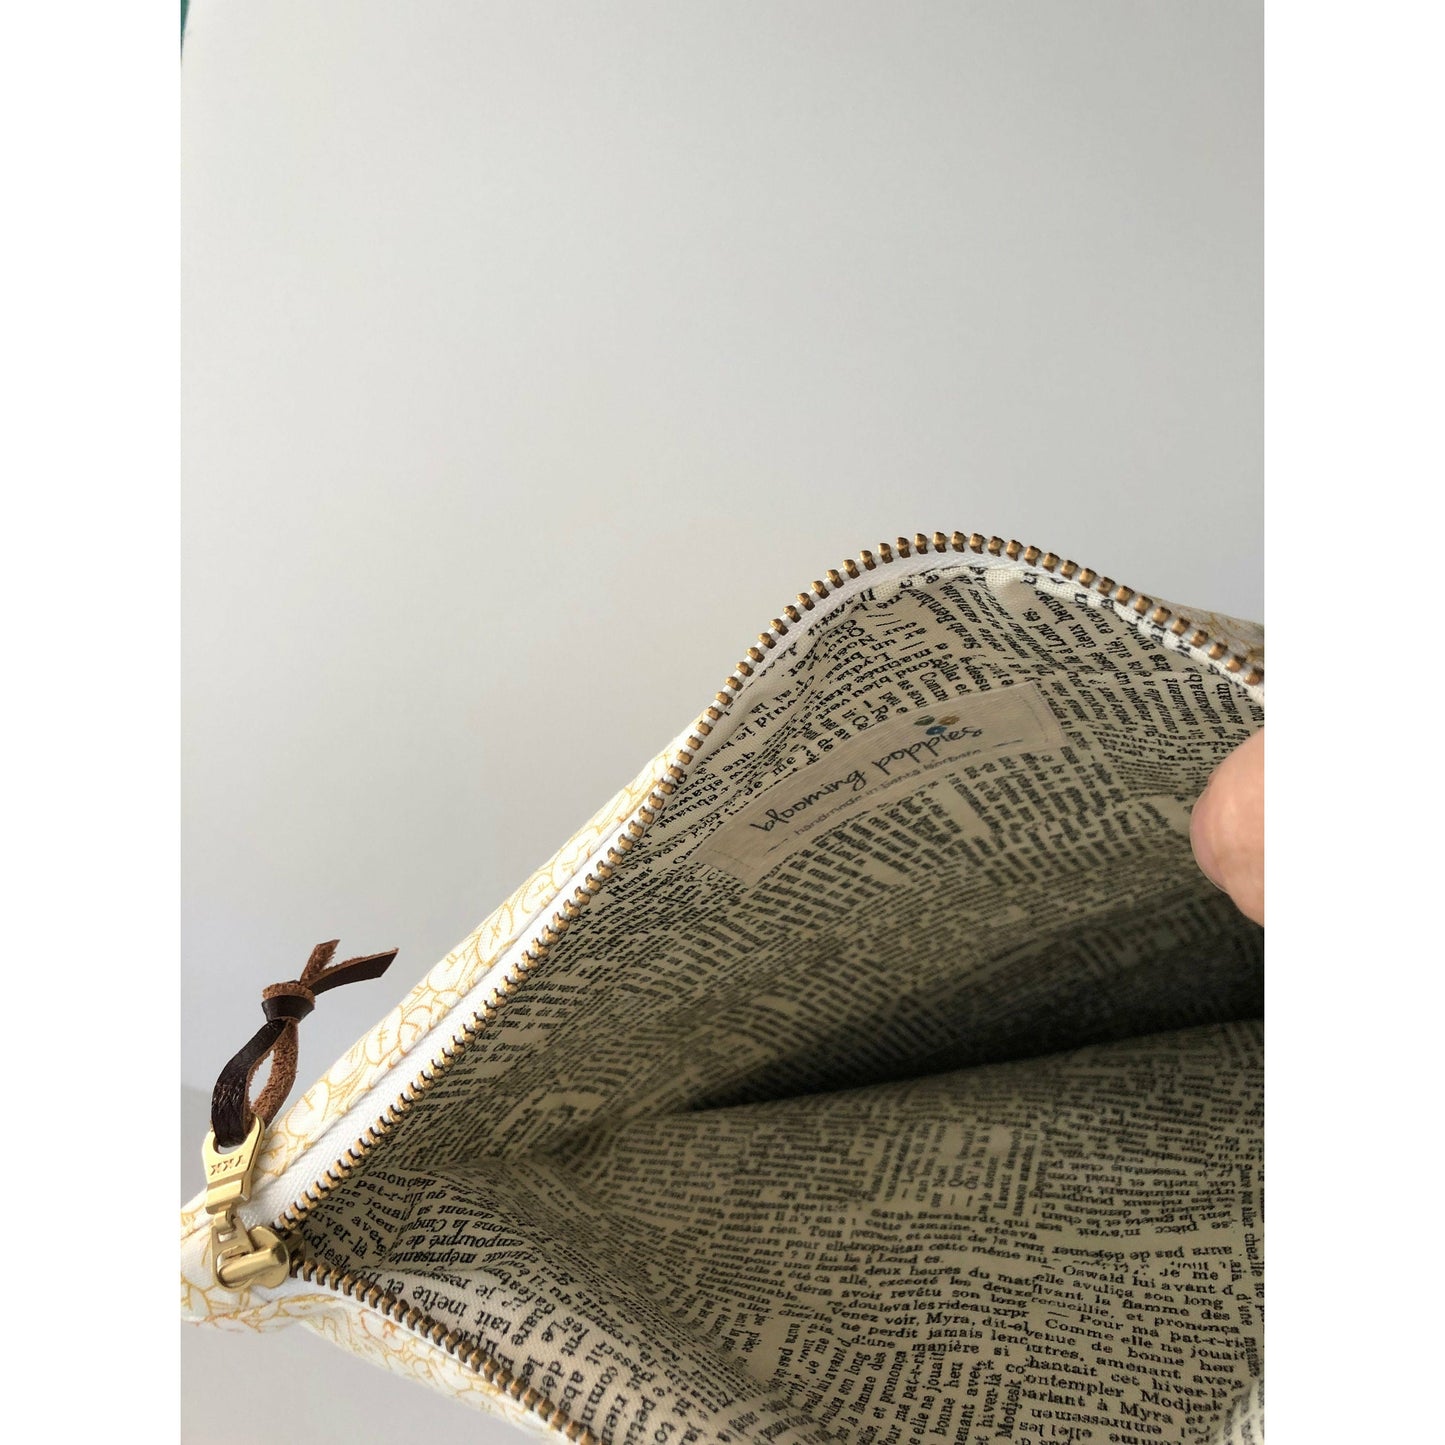 Handmade Modern Foldover Clutch Purse- The Amelia, with Leather Trim and Designer Fabrics